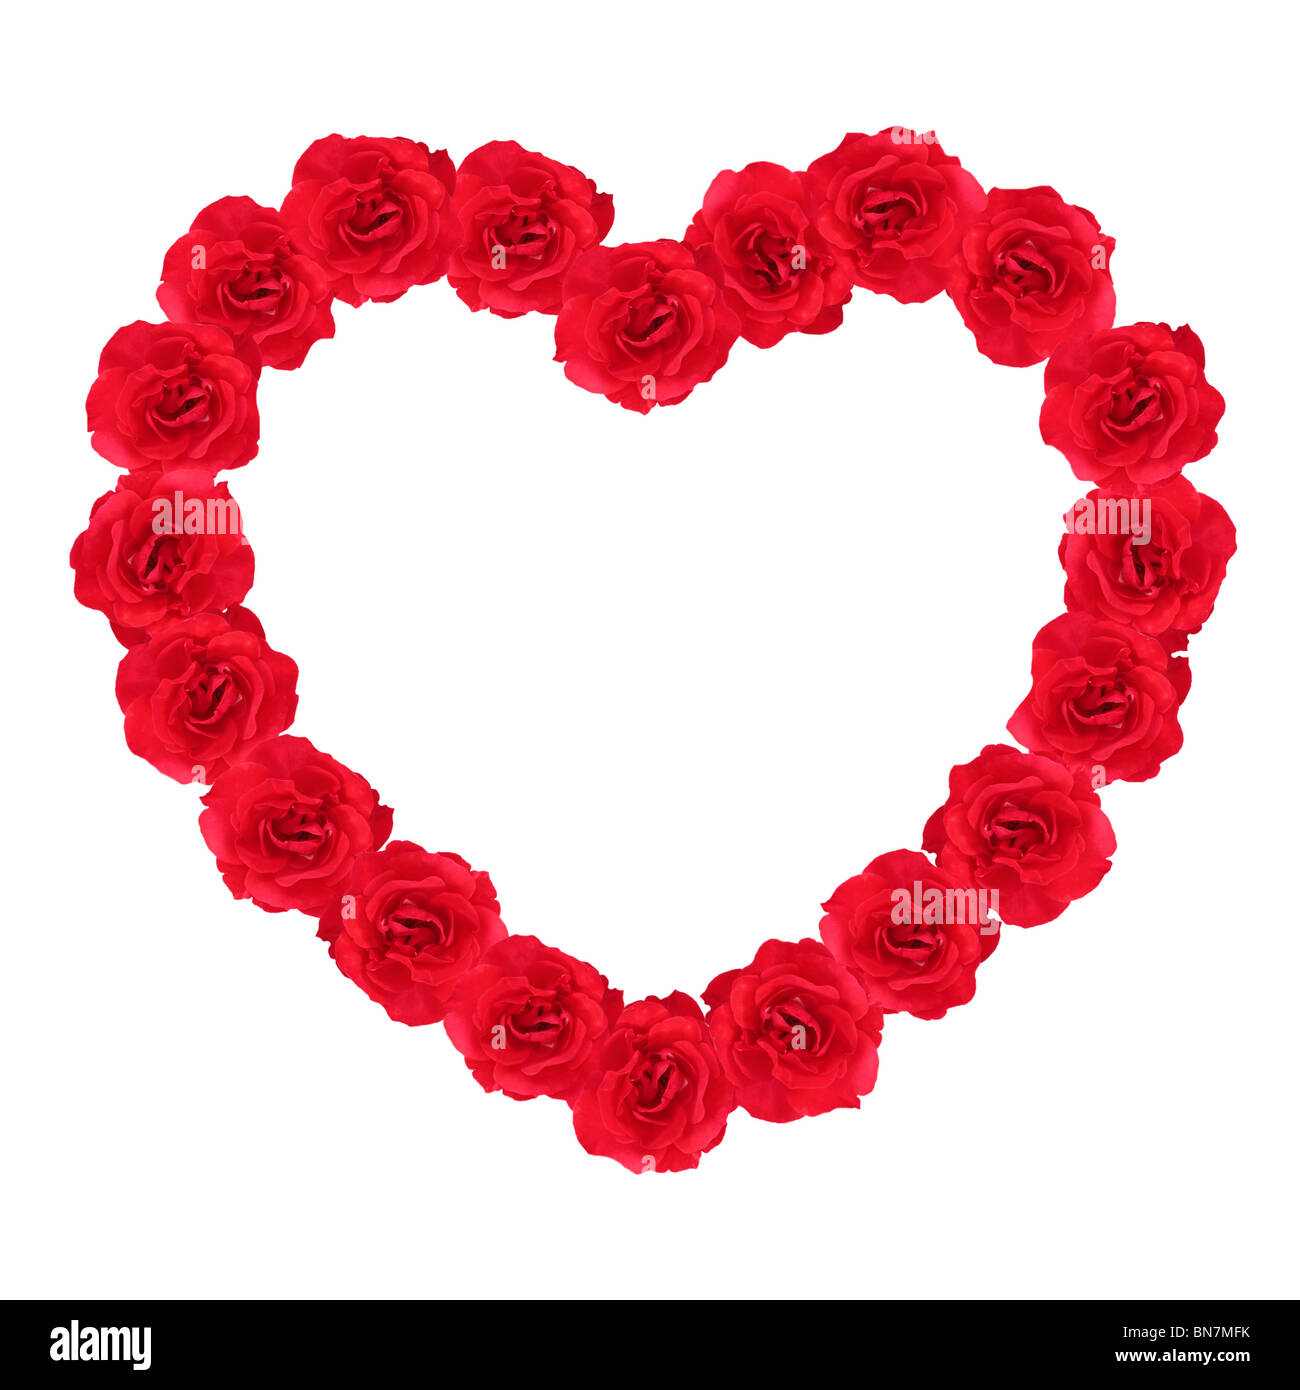 Red rose heart shape symbol on white background Stock Photo